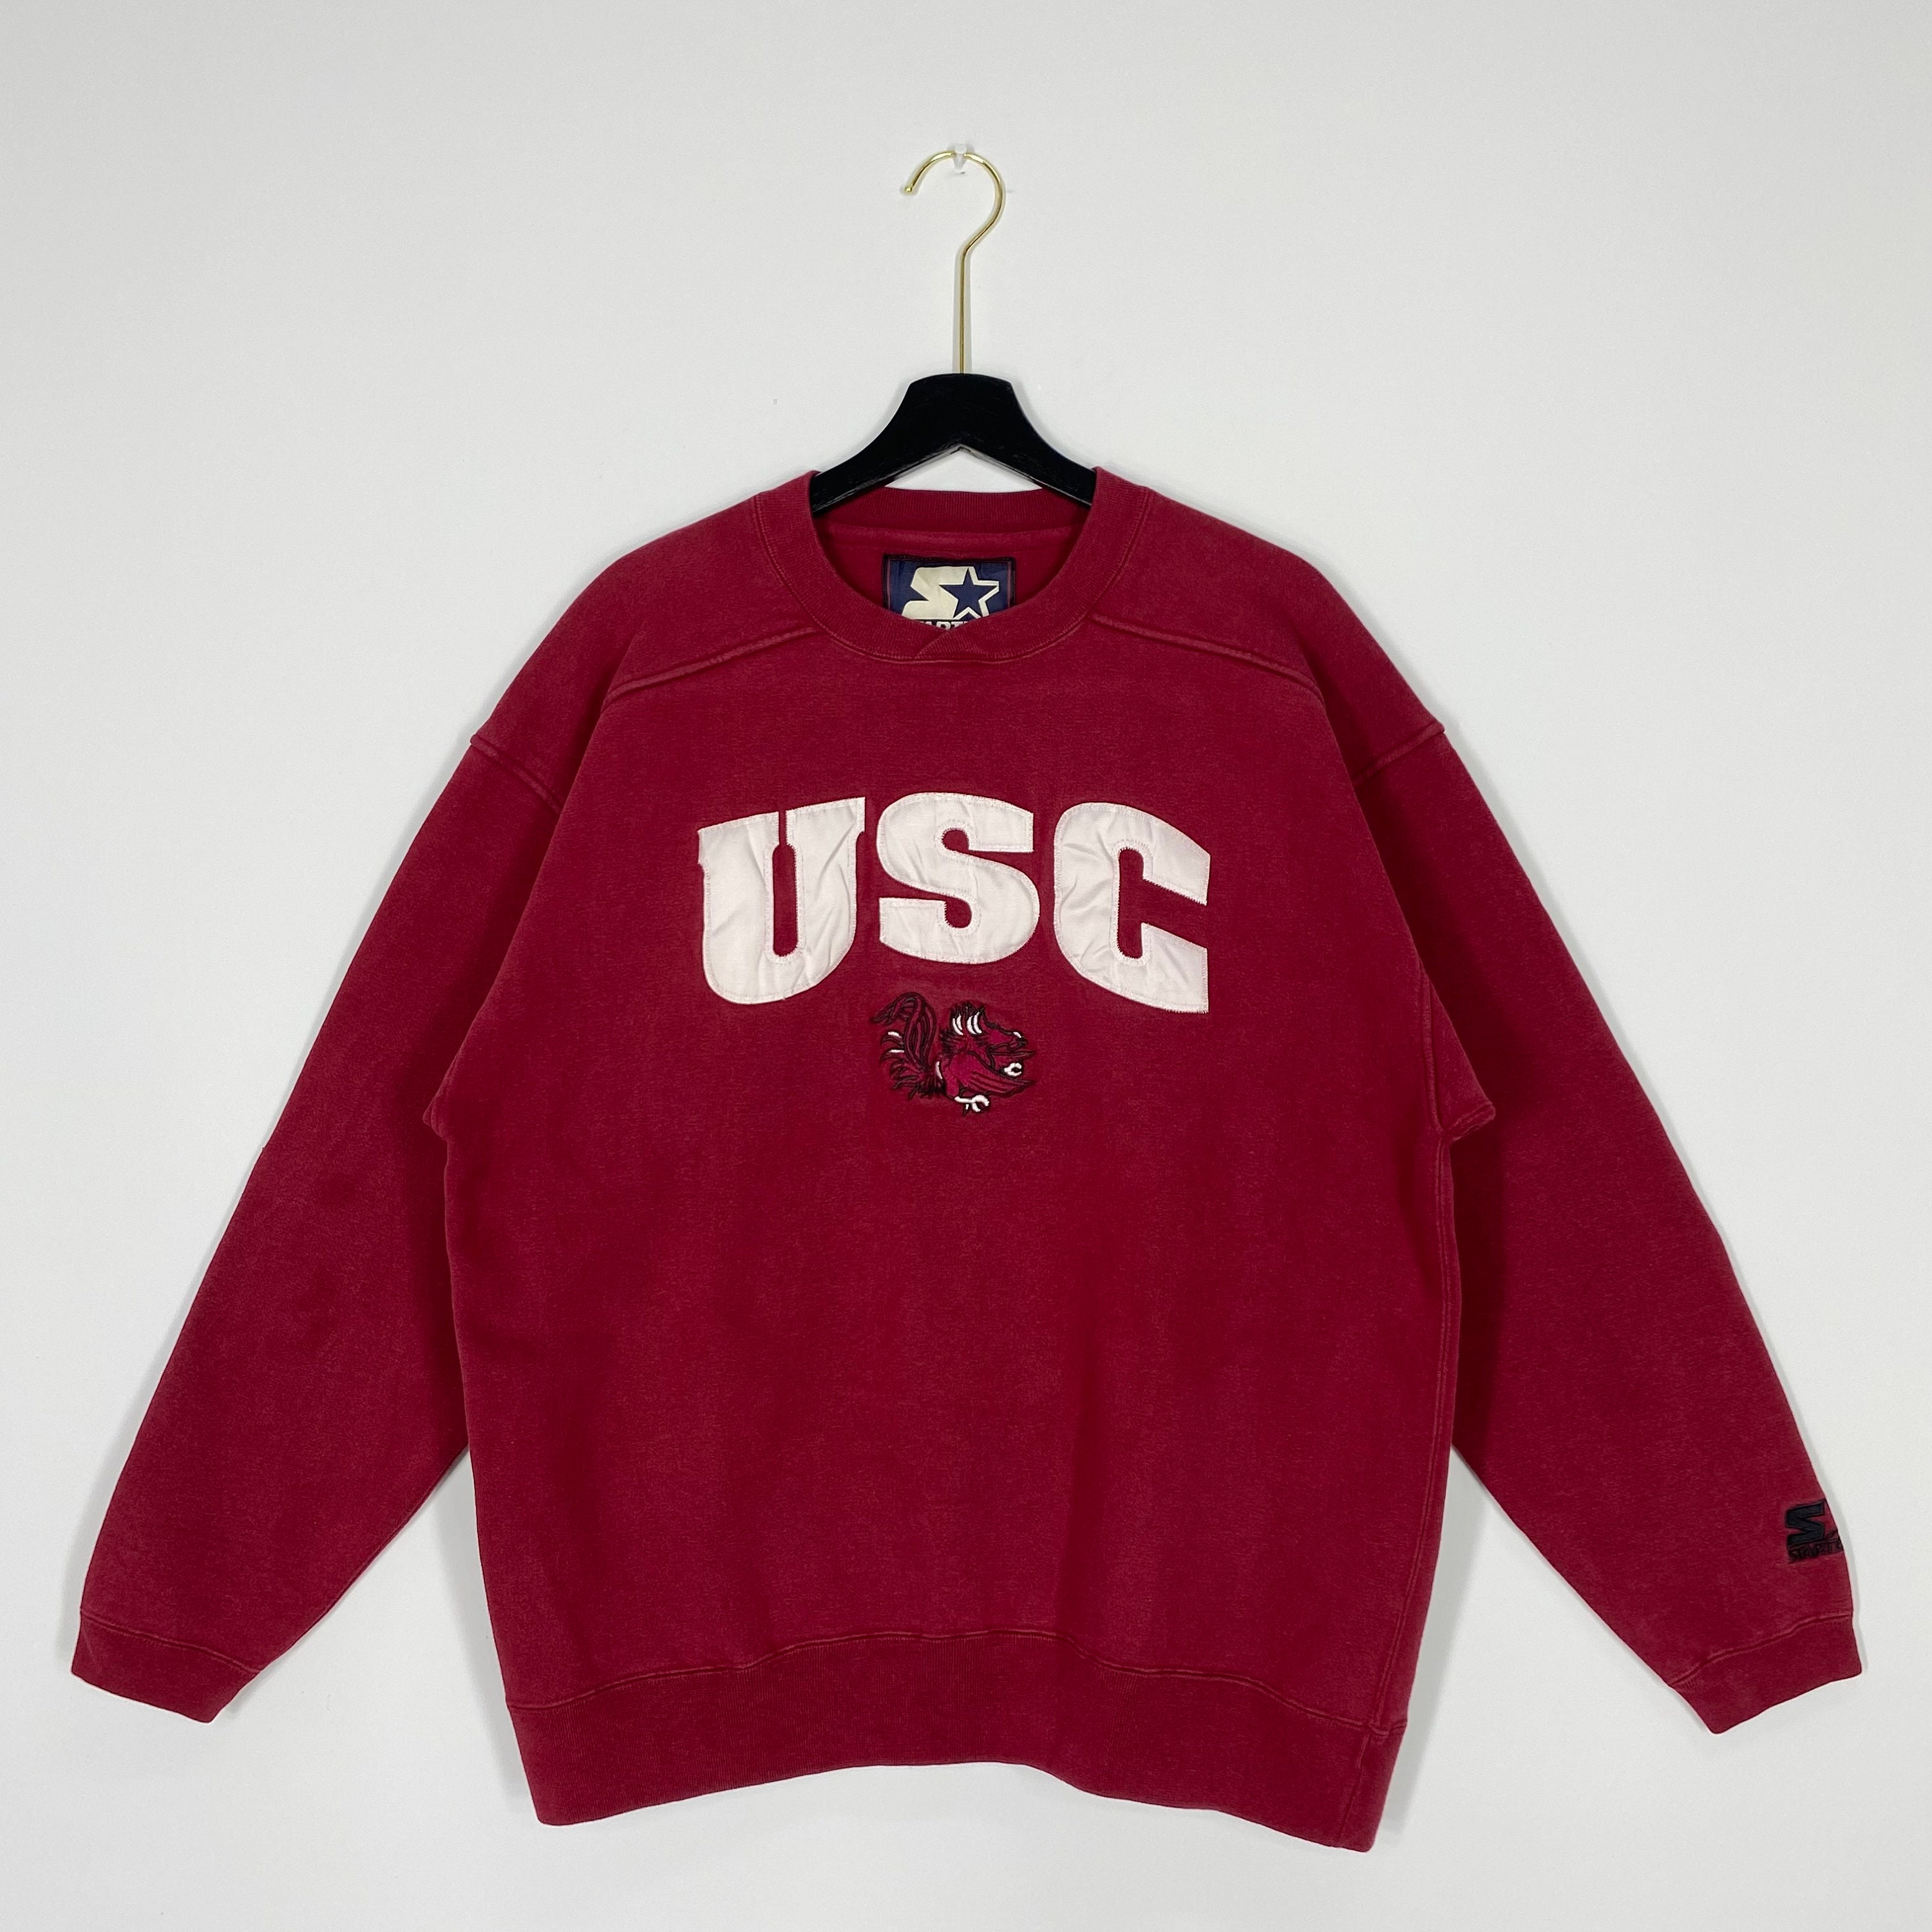 Buy Usc Embroidered Sweatshirt Online In India -  India